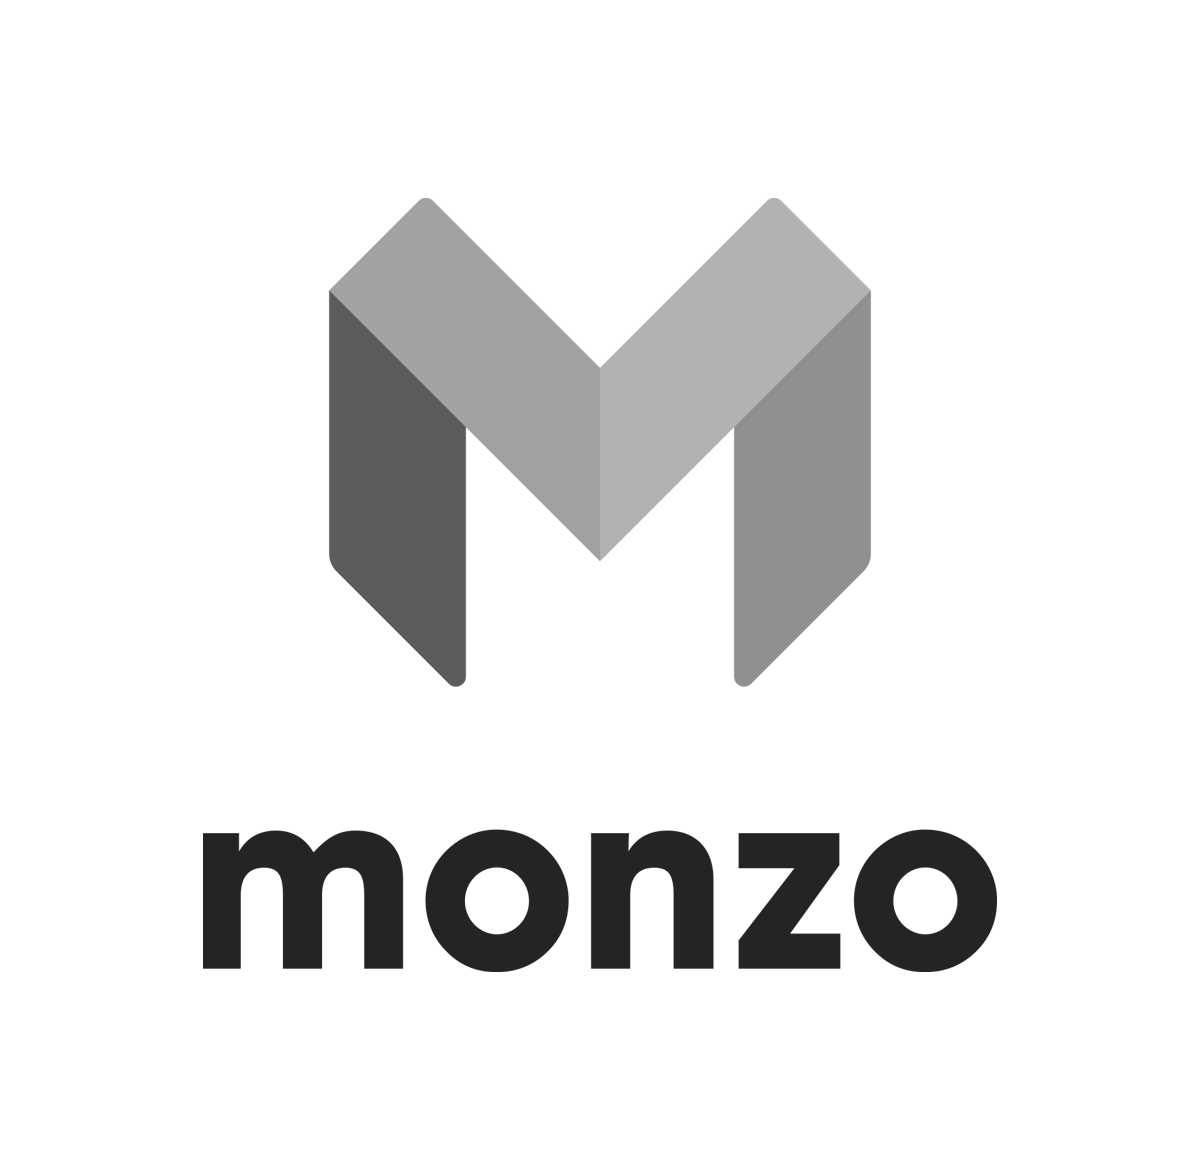 Monzo_logo.svg.png